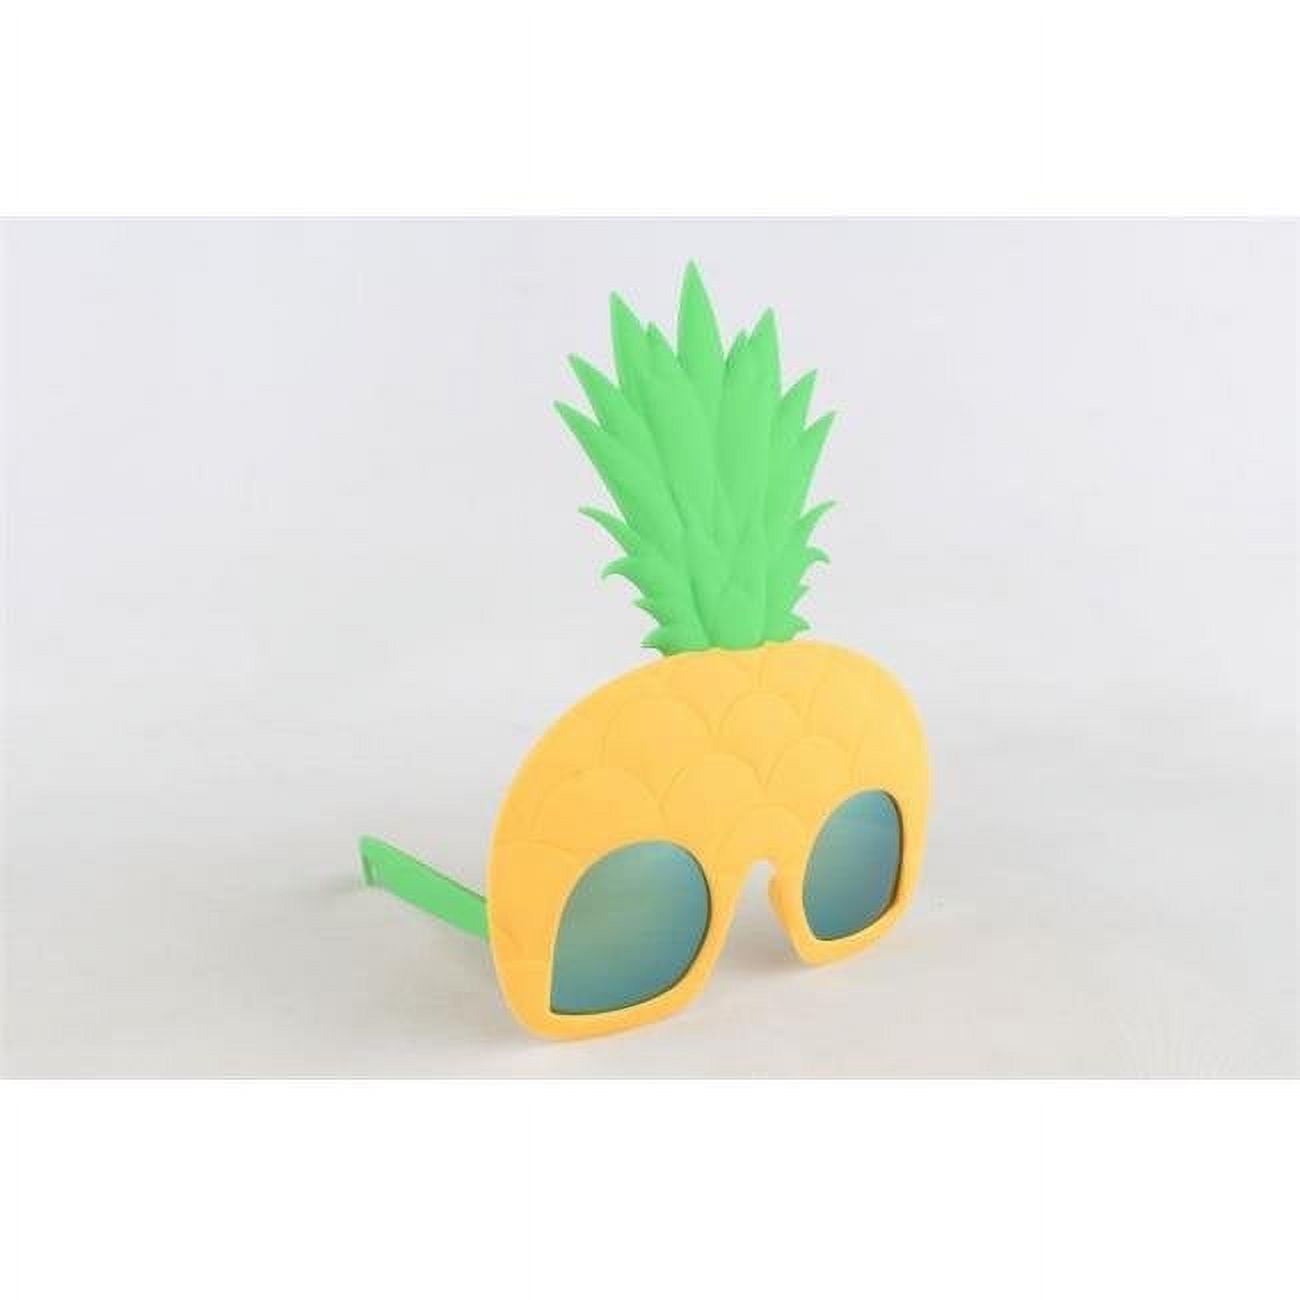 Picture of Sunstaches SG3268 Pineapple Fruit Food Fun Costume Mask Glasses Sunglasses Multi Color